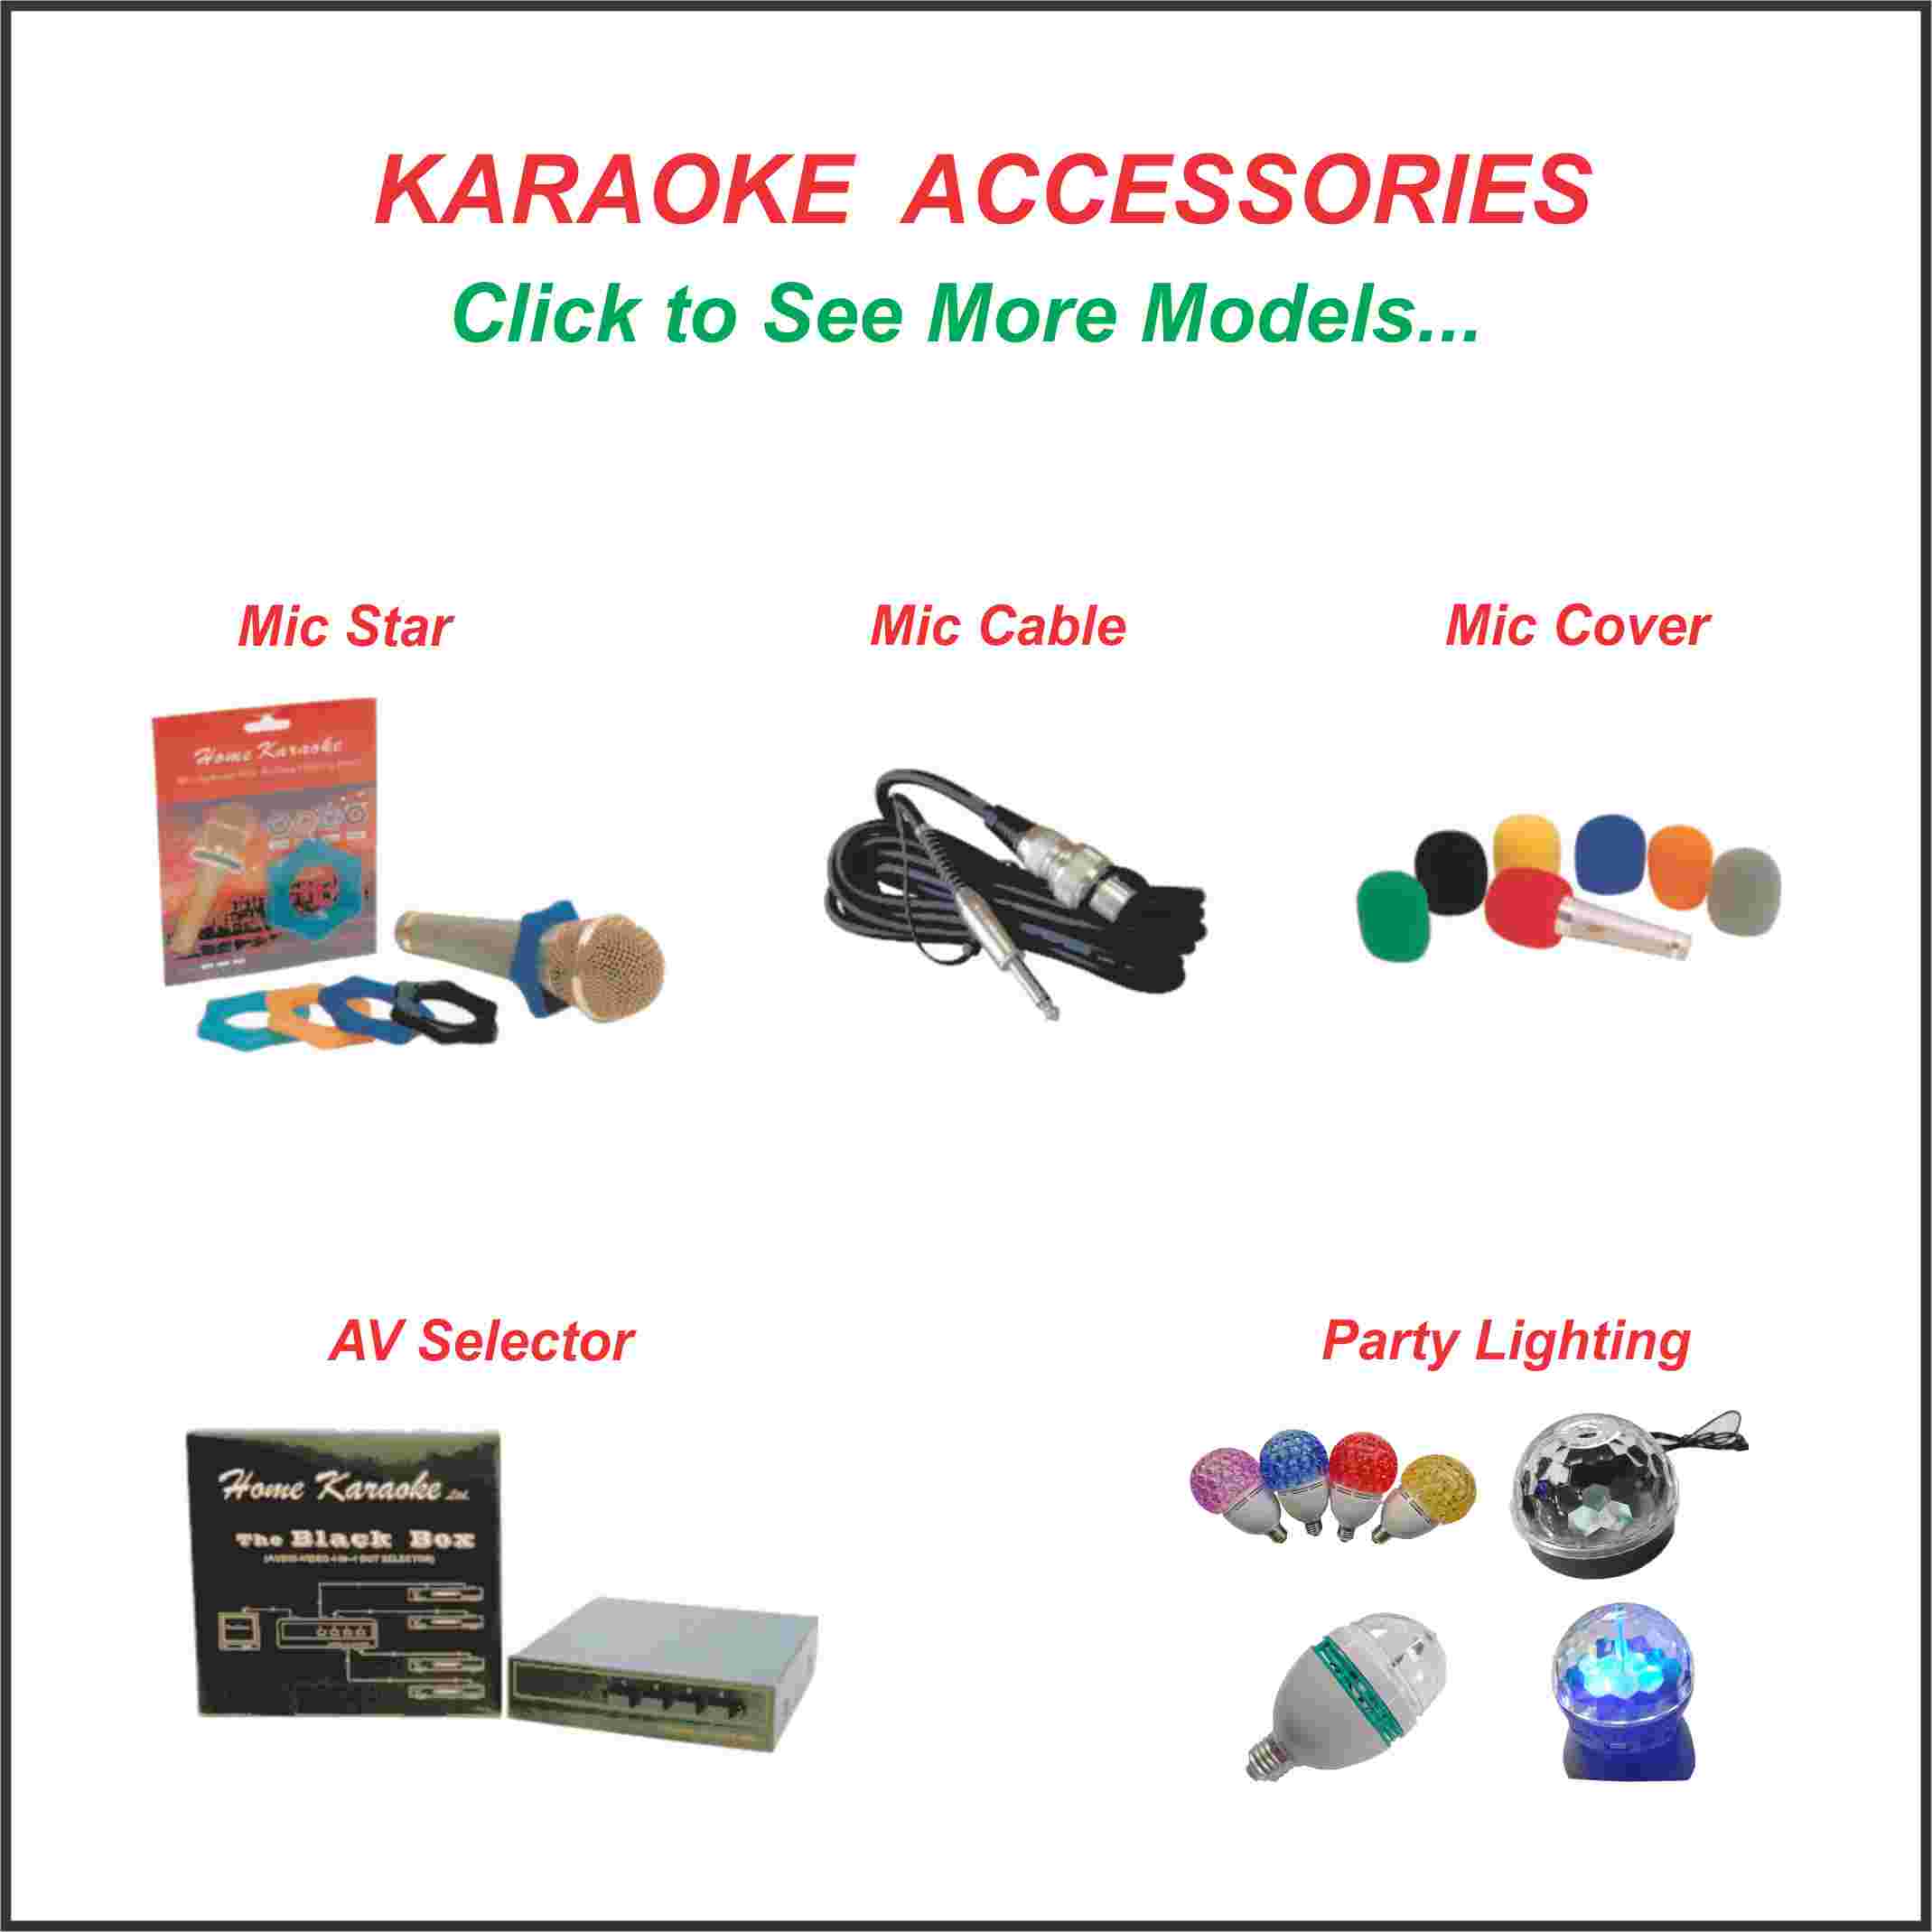 10. Karaoke Accessories